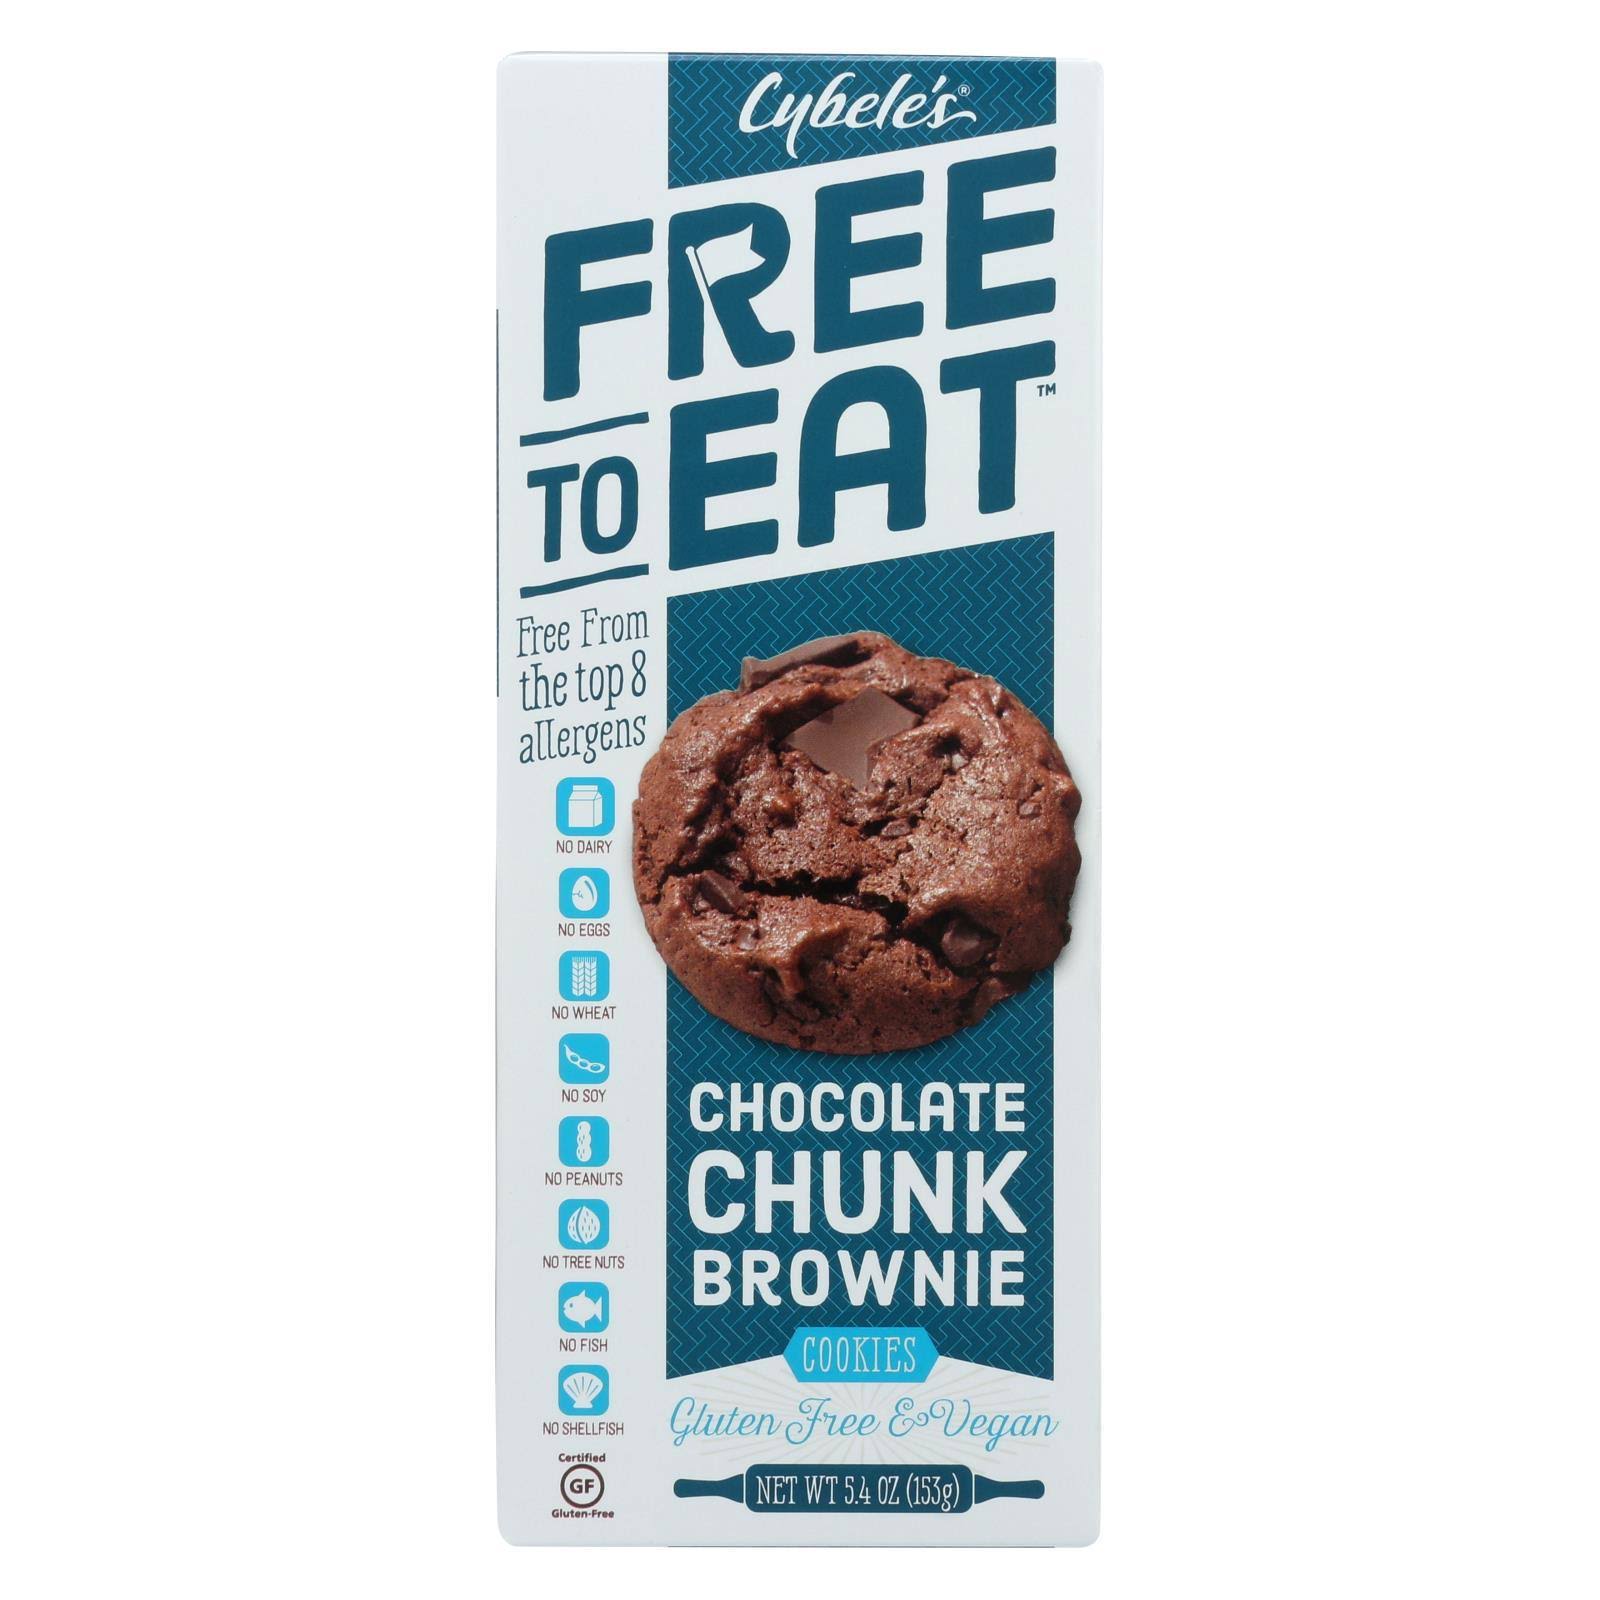 Cybele's Free-to-Eat Vegan & Gluten-Free Cookies Chocolate Chunk Brownie